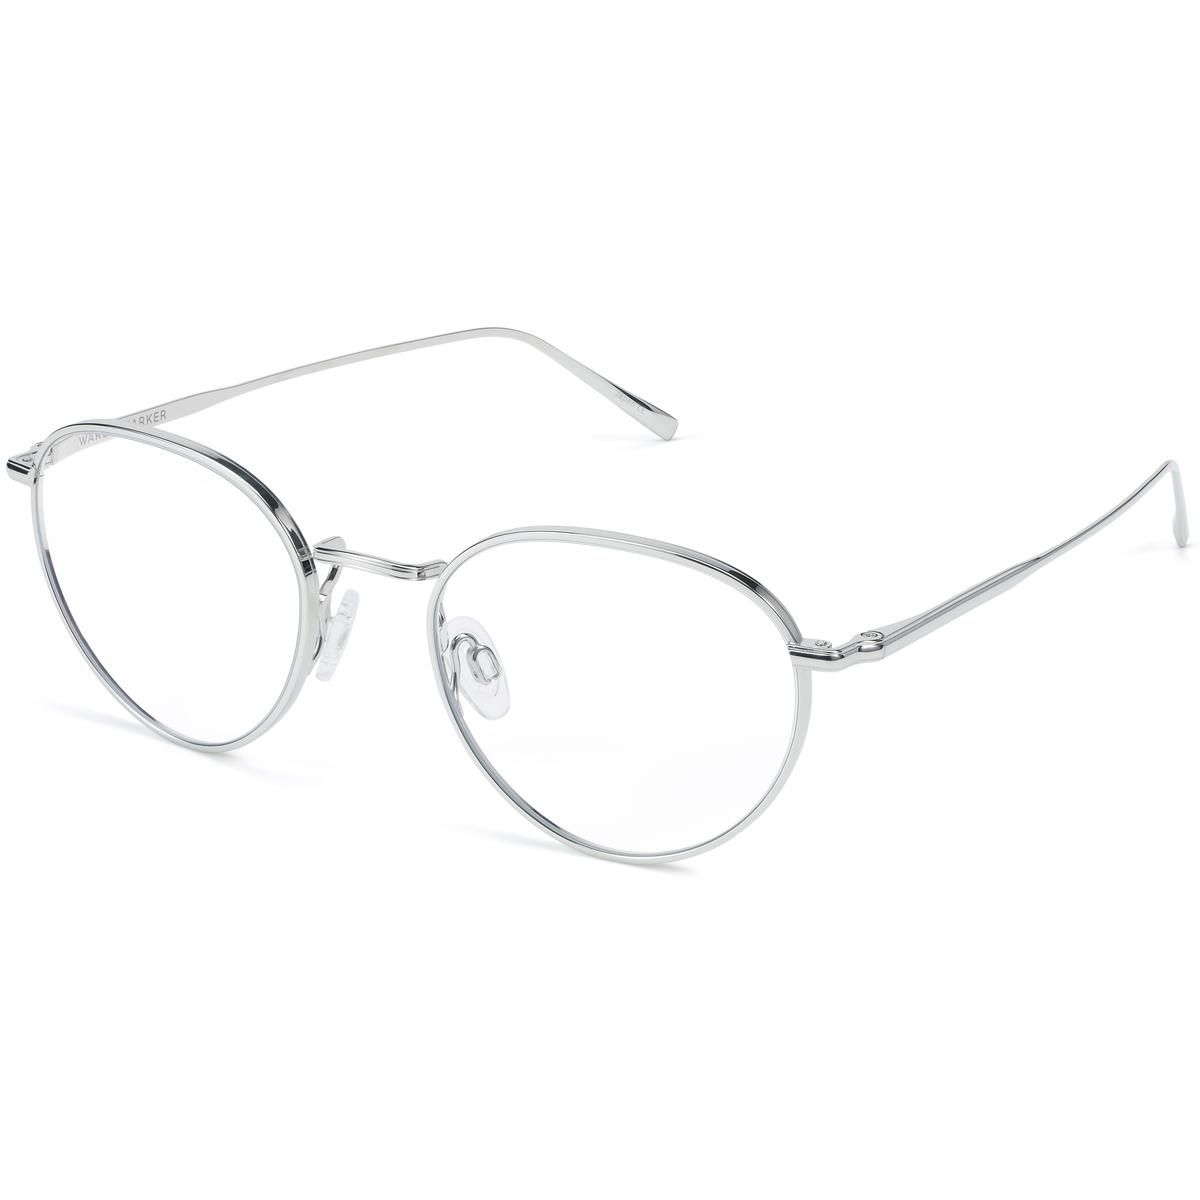 Warby Parker + Ezra Eyeglasses in Burnished Silver